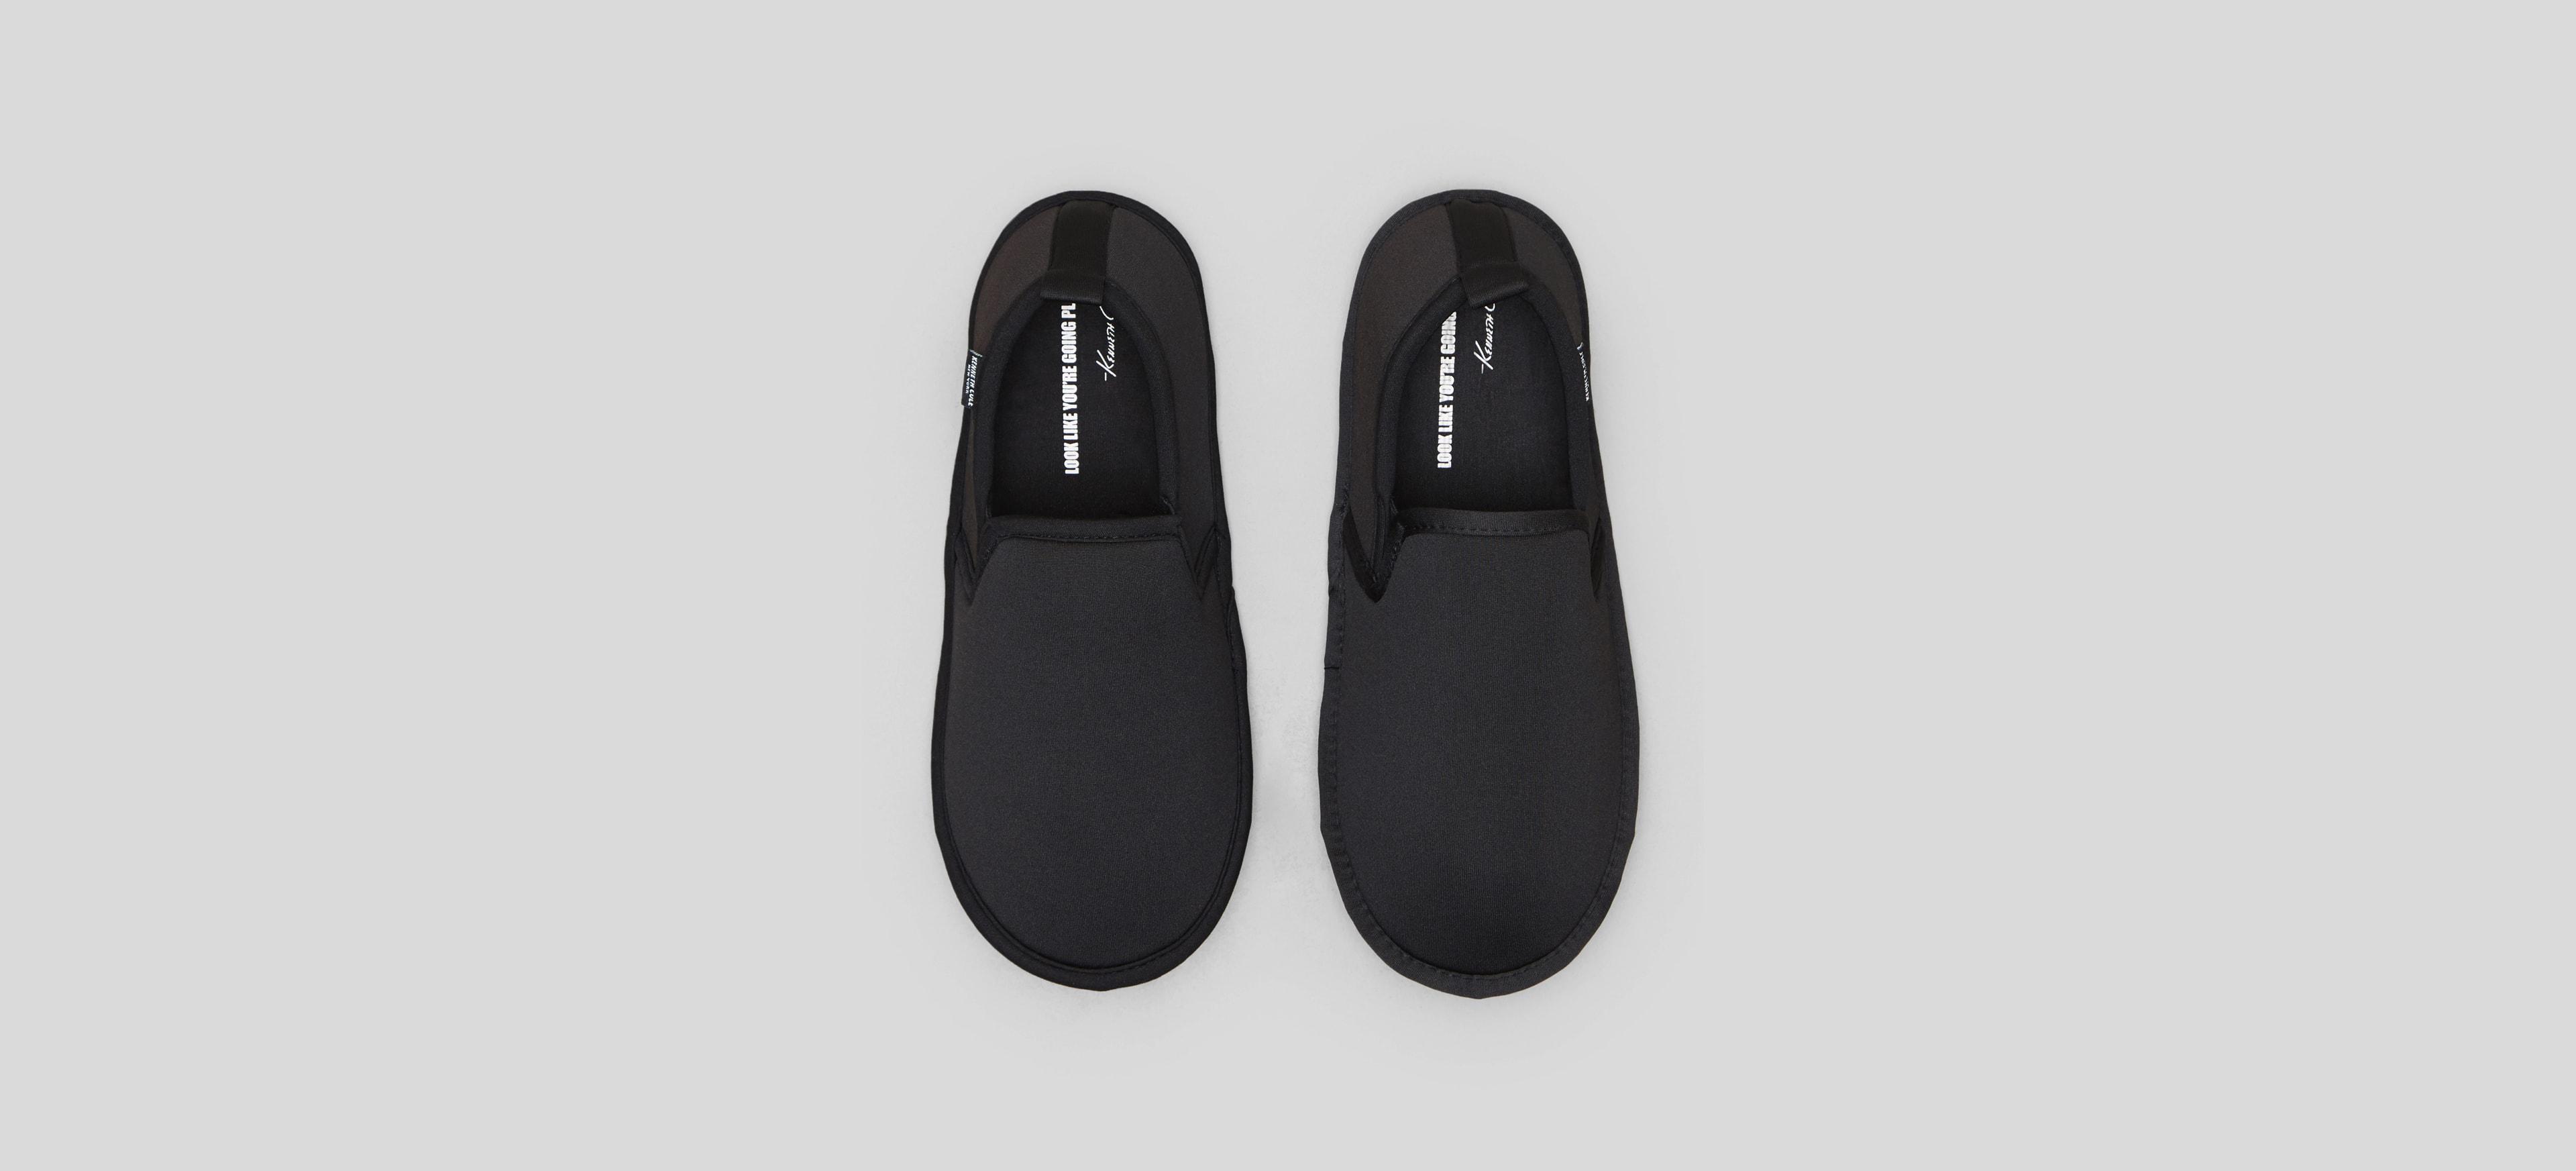 foldable travel slippers